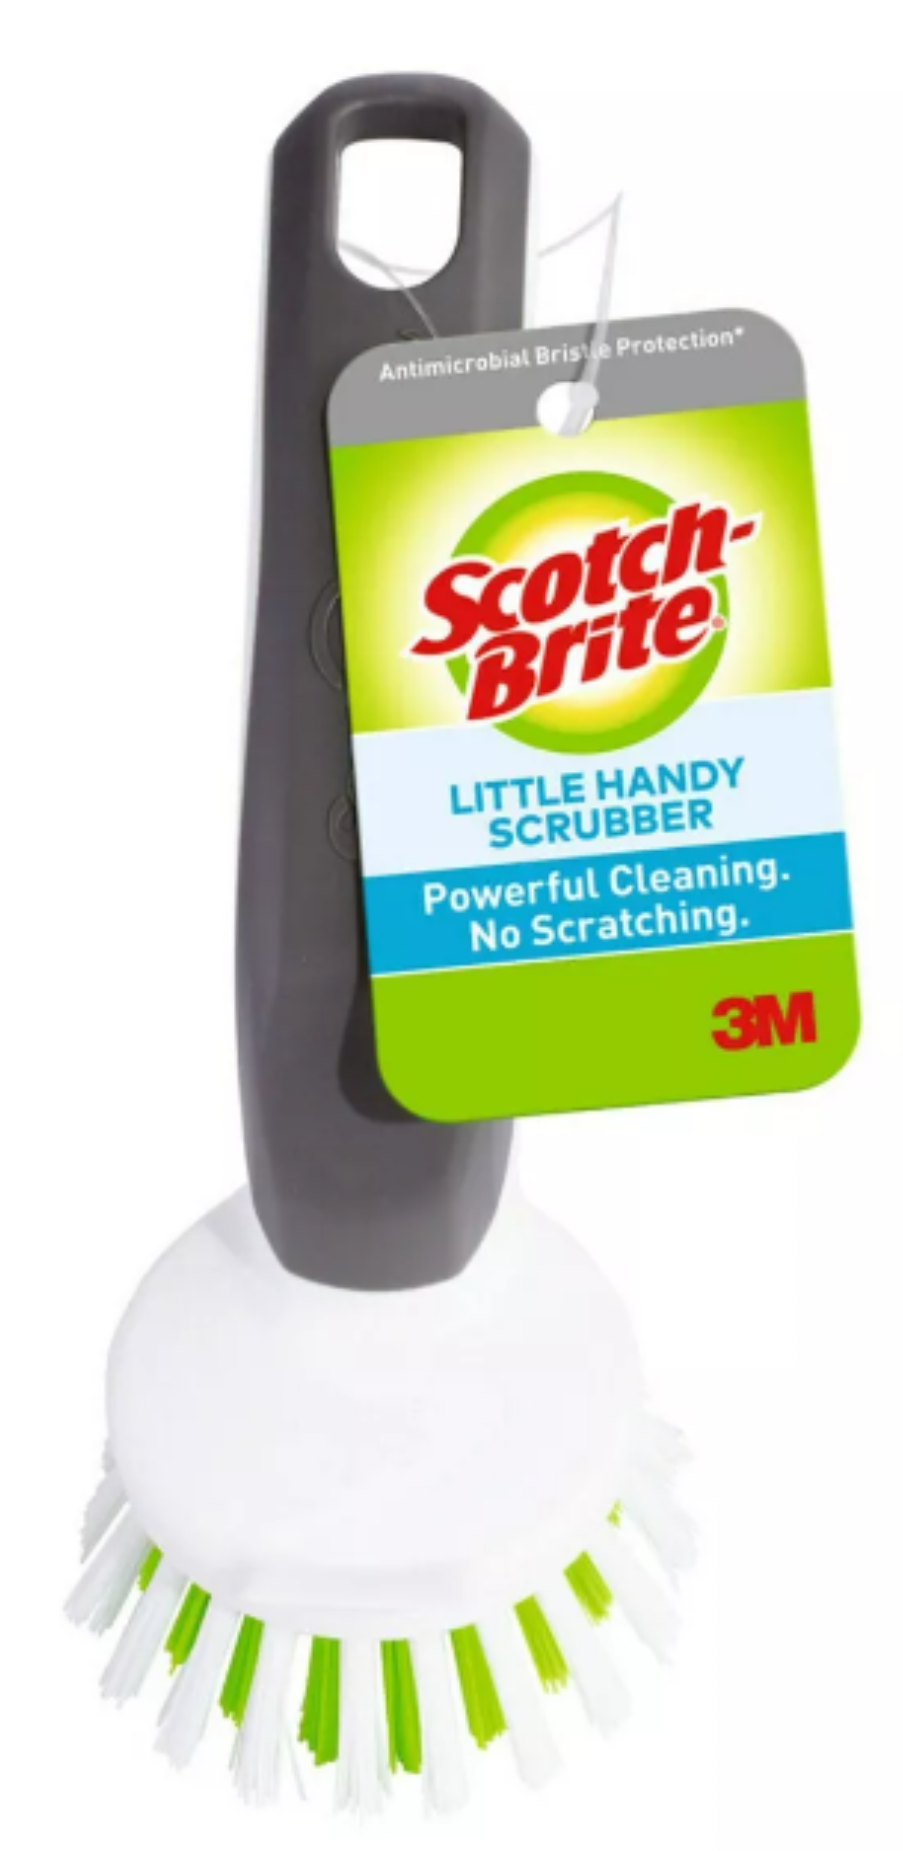 Scotch-Brite Little Handy Scrubber